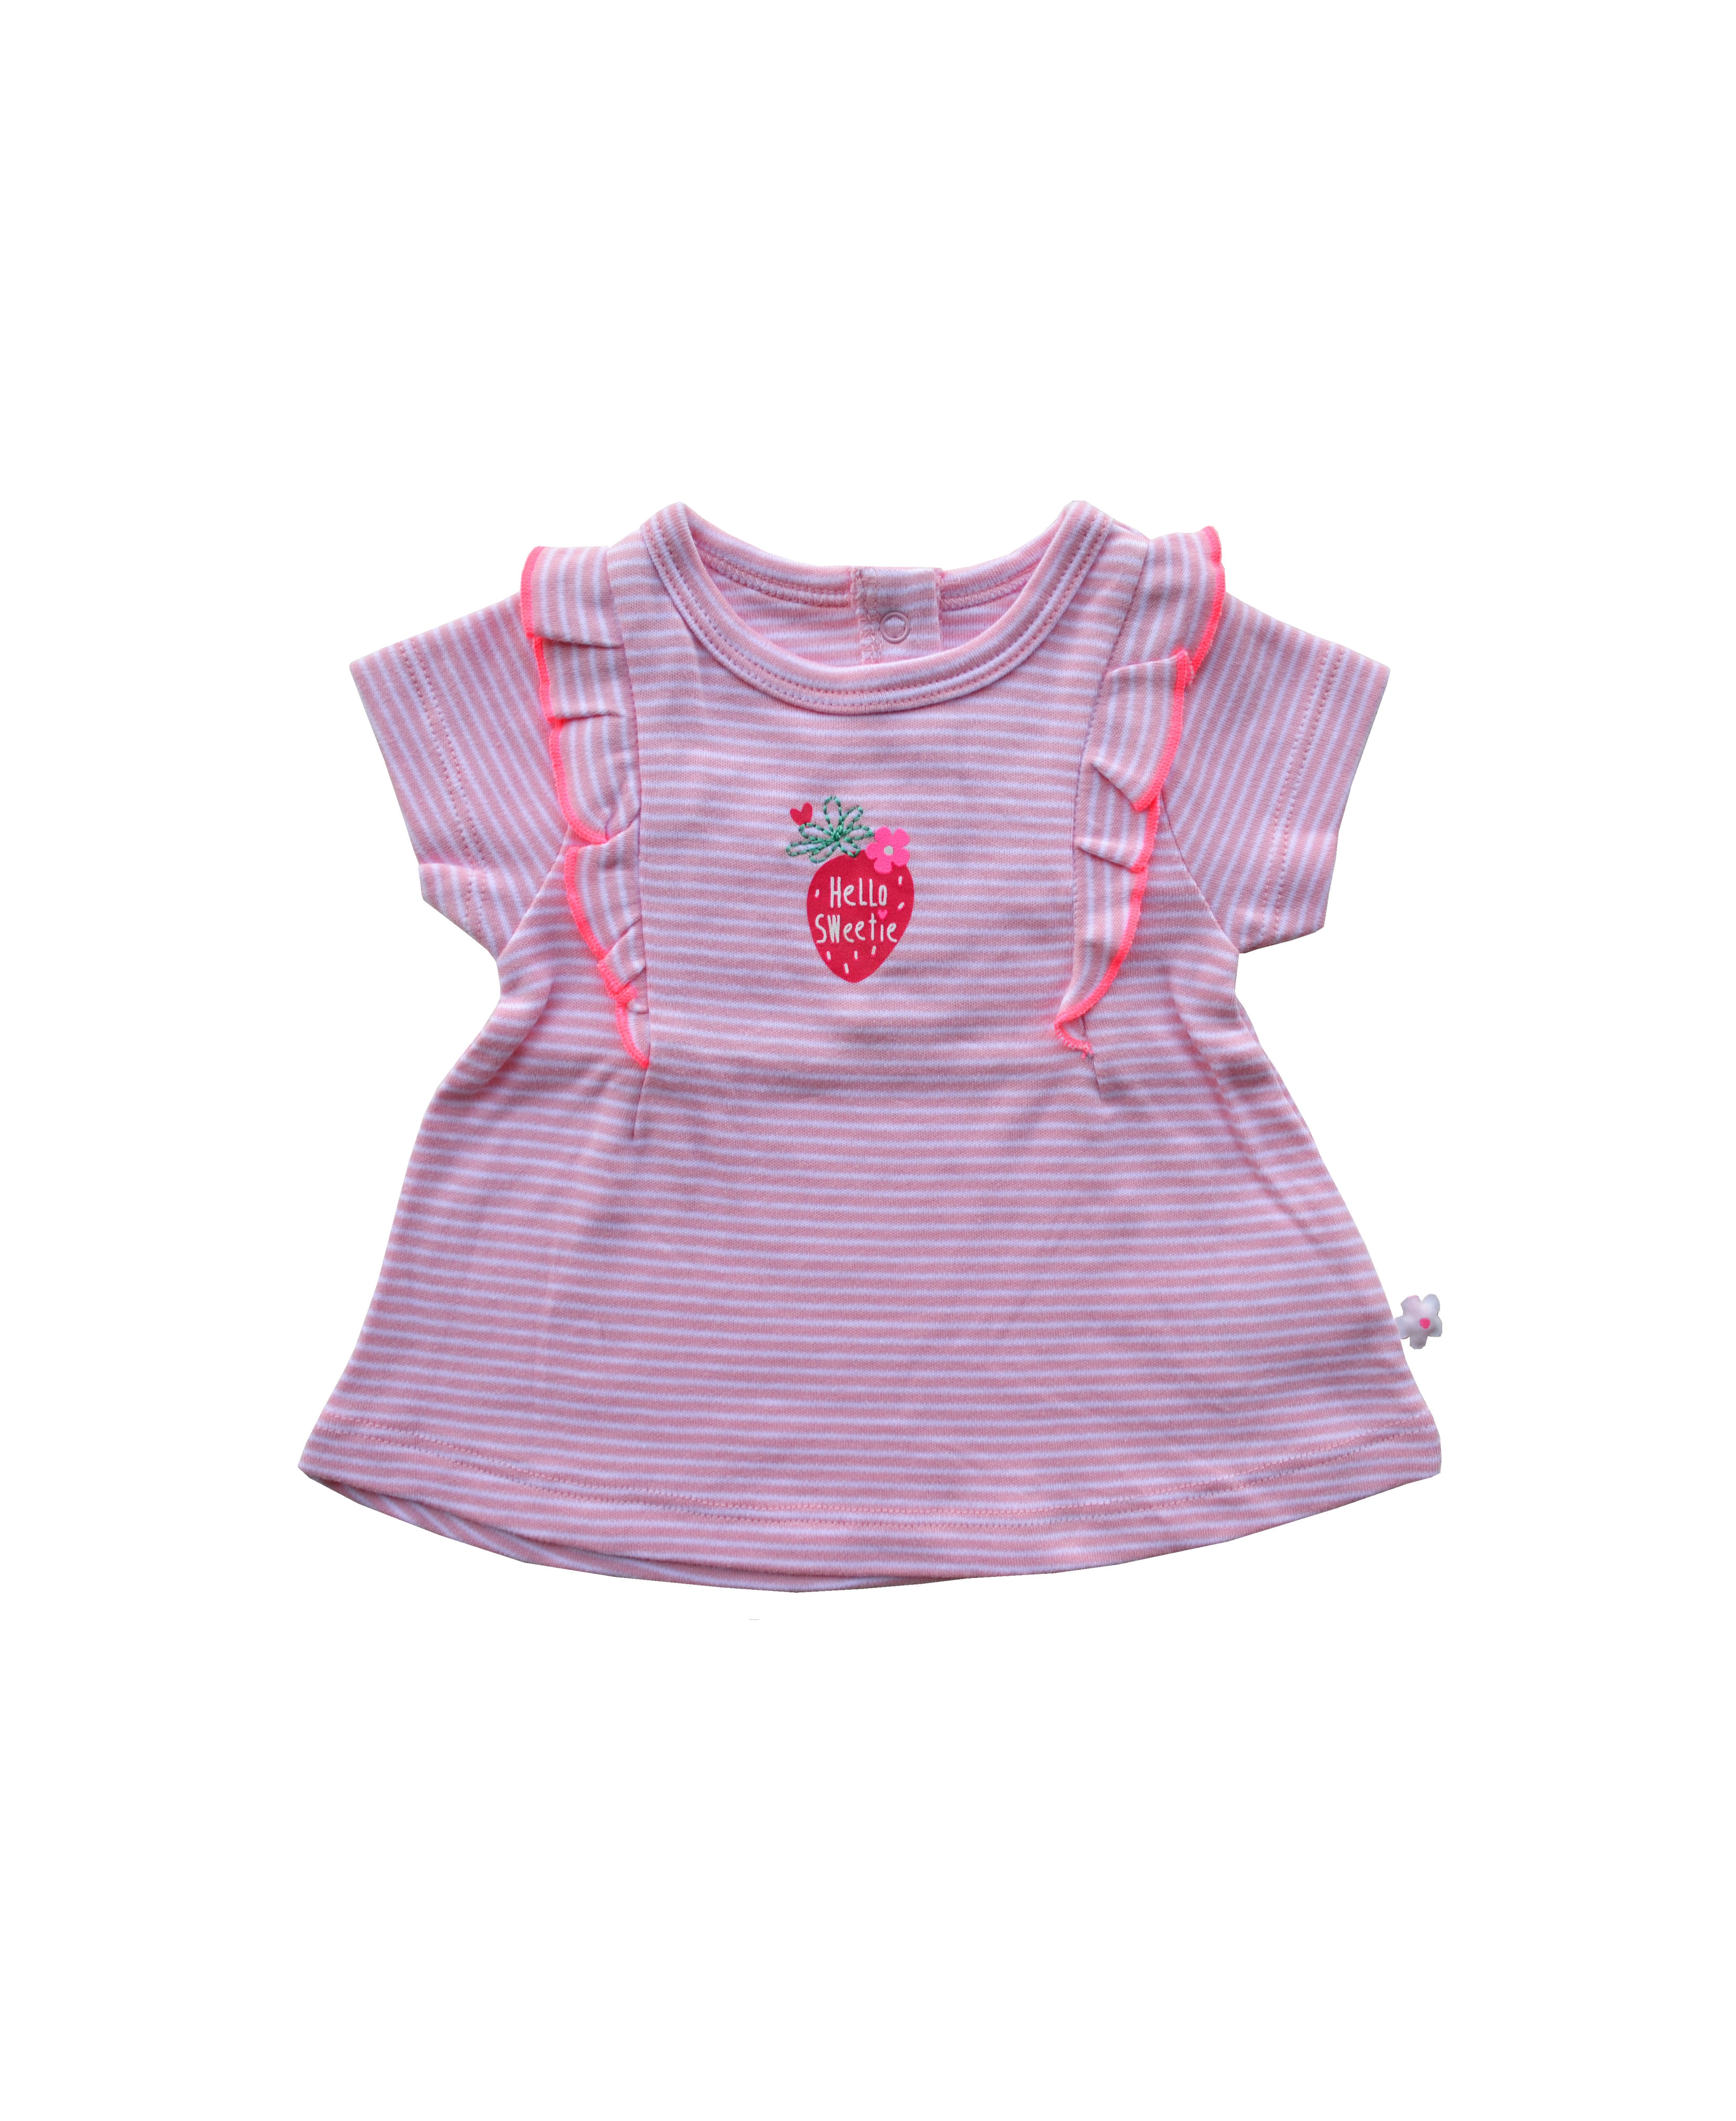 Pink/White Girls Top with frills and Strawberry Print (100% Cotton Interlock Biowash)